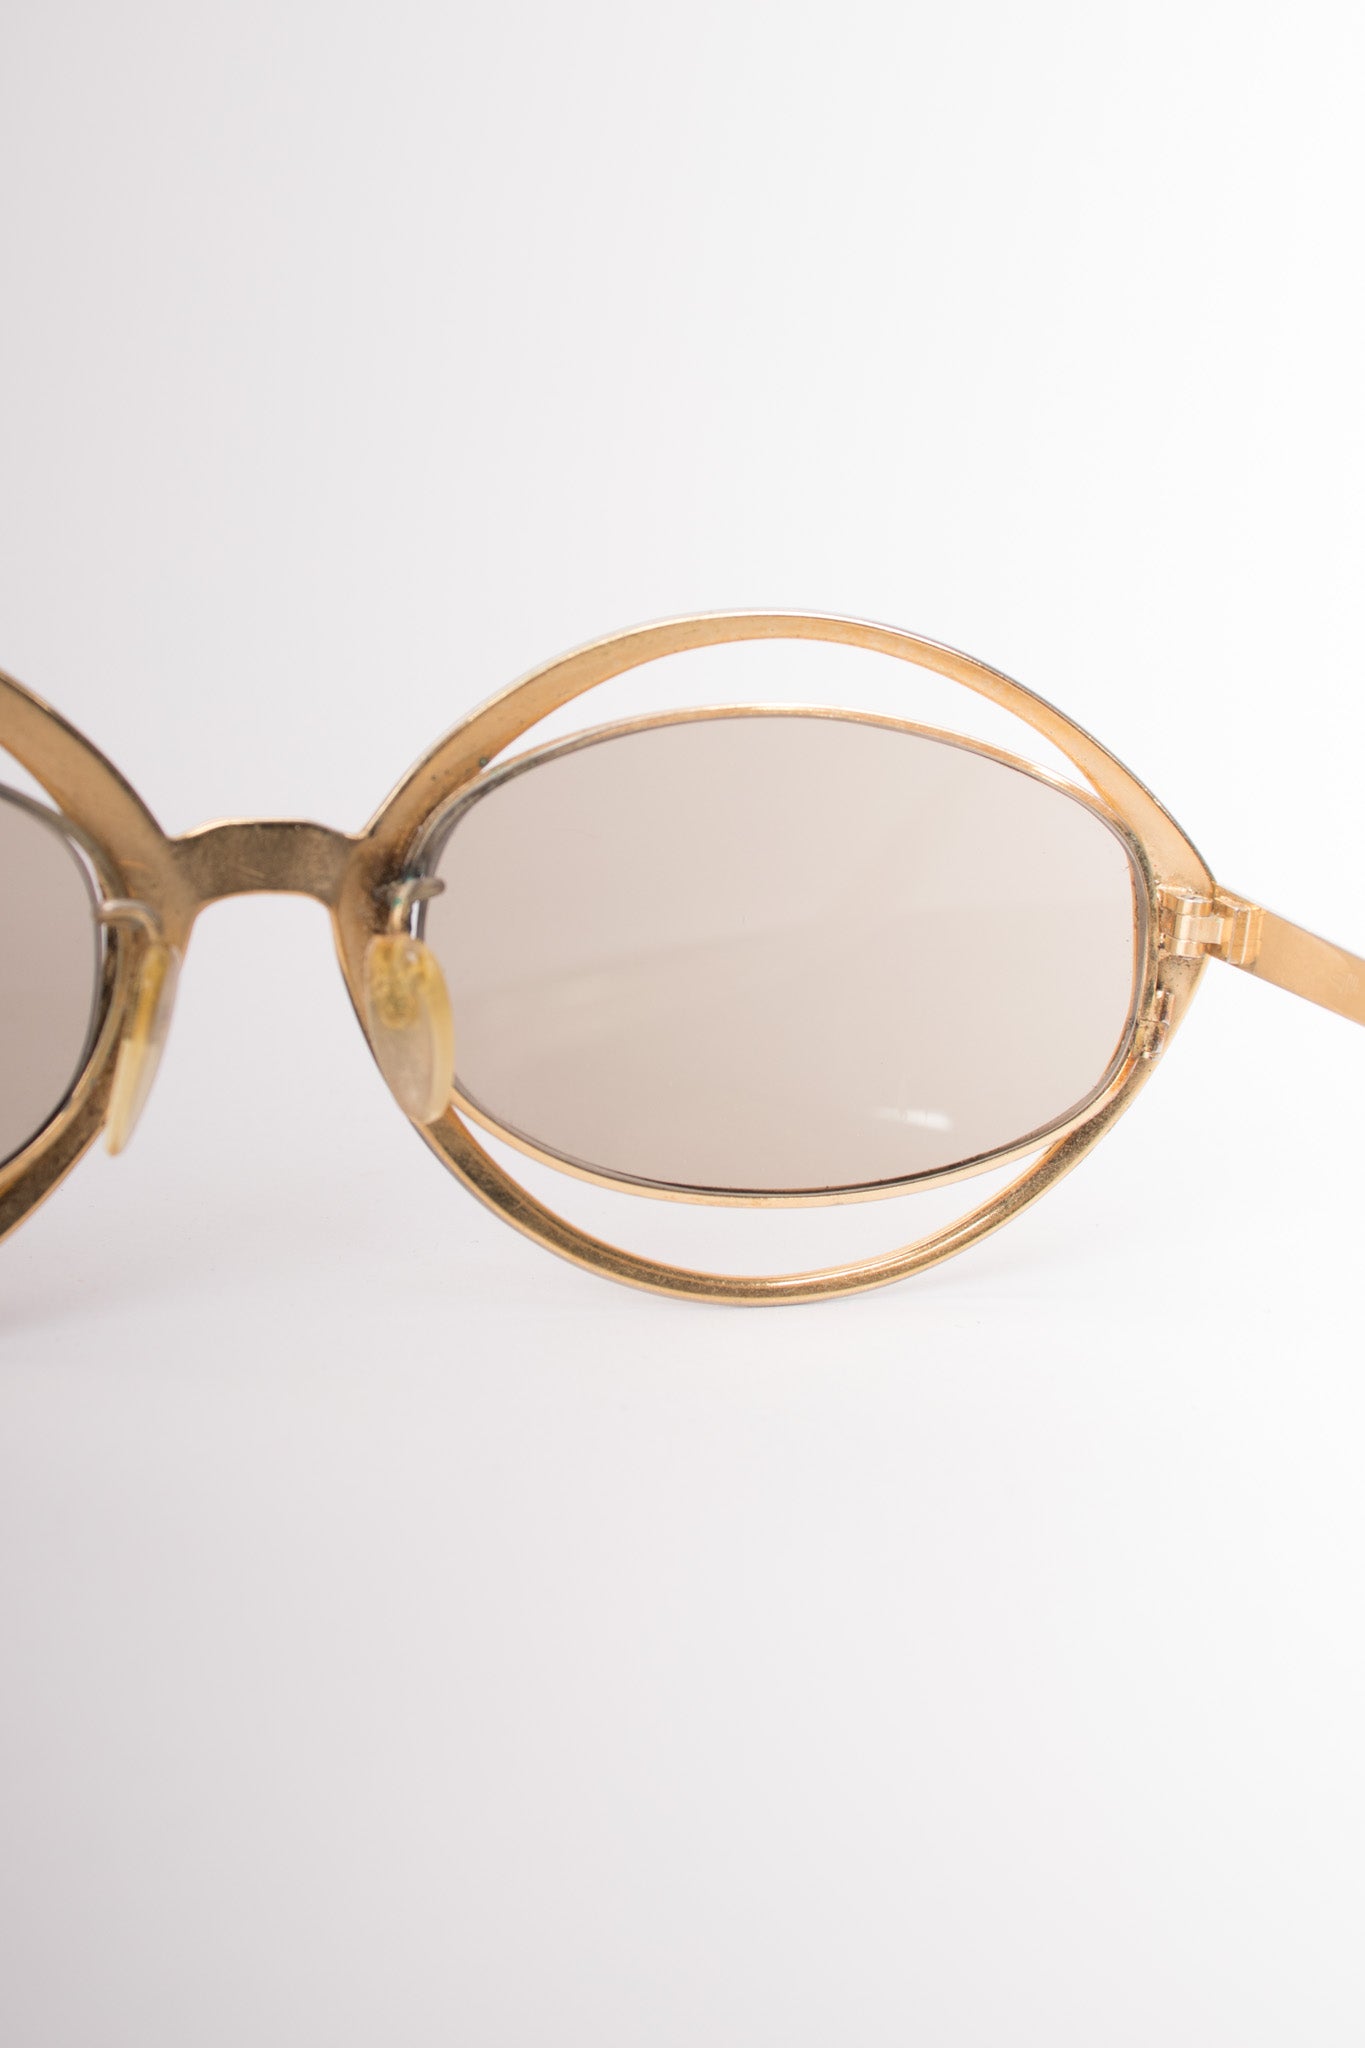 Silhouette Vintage Orbit Oval Cutout Sunglasses